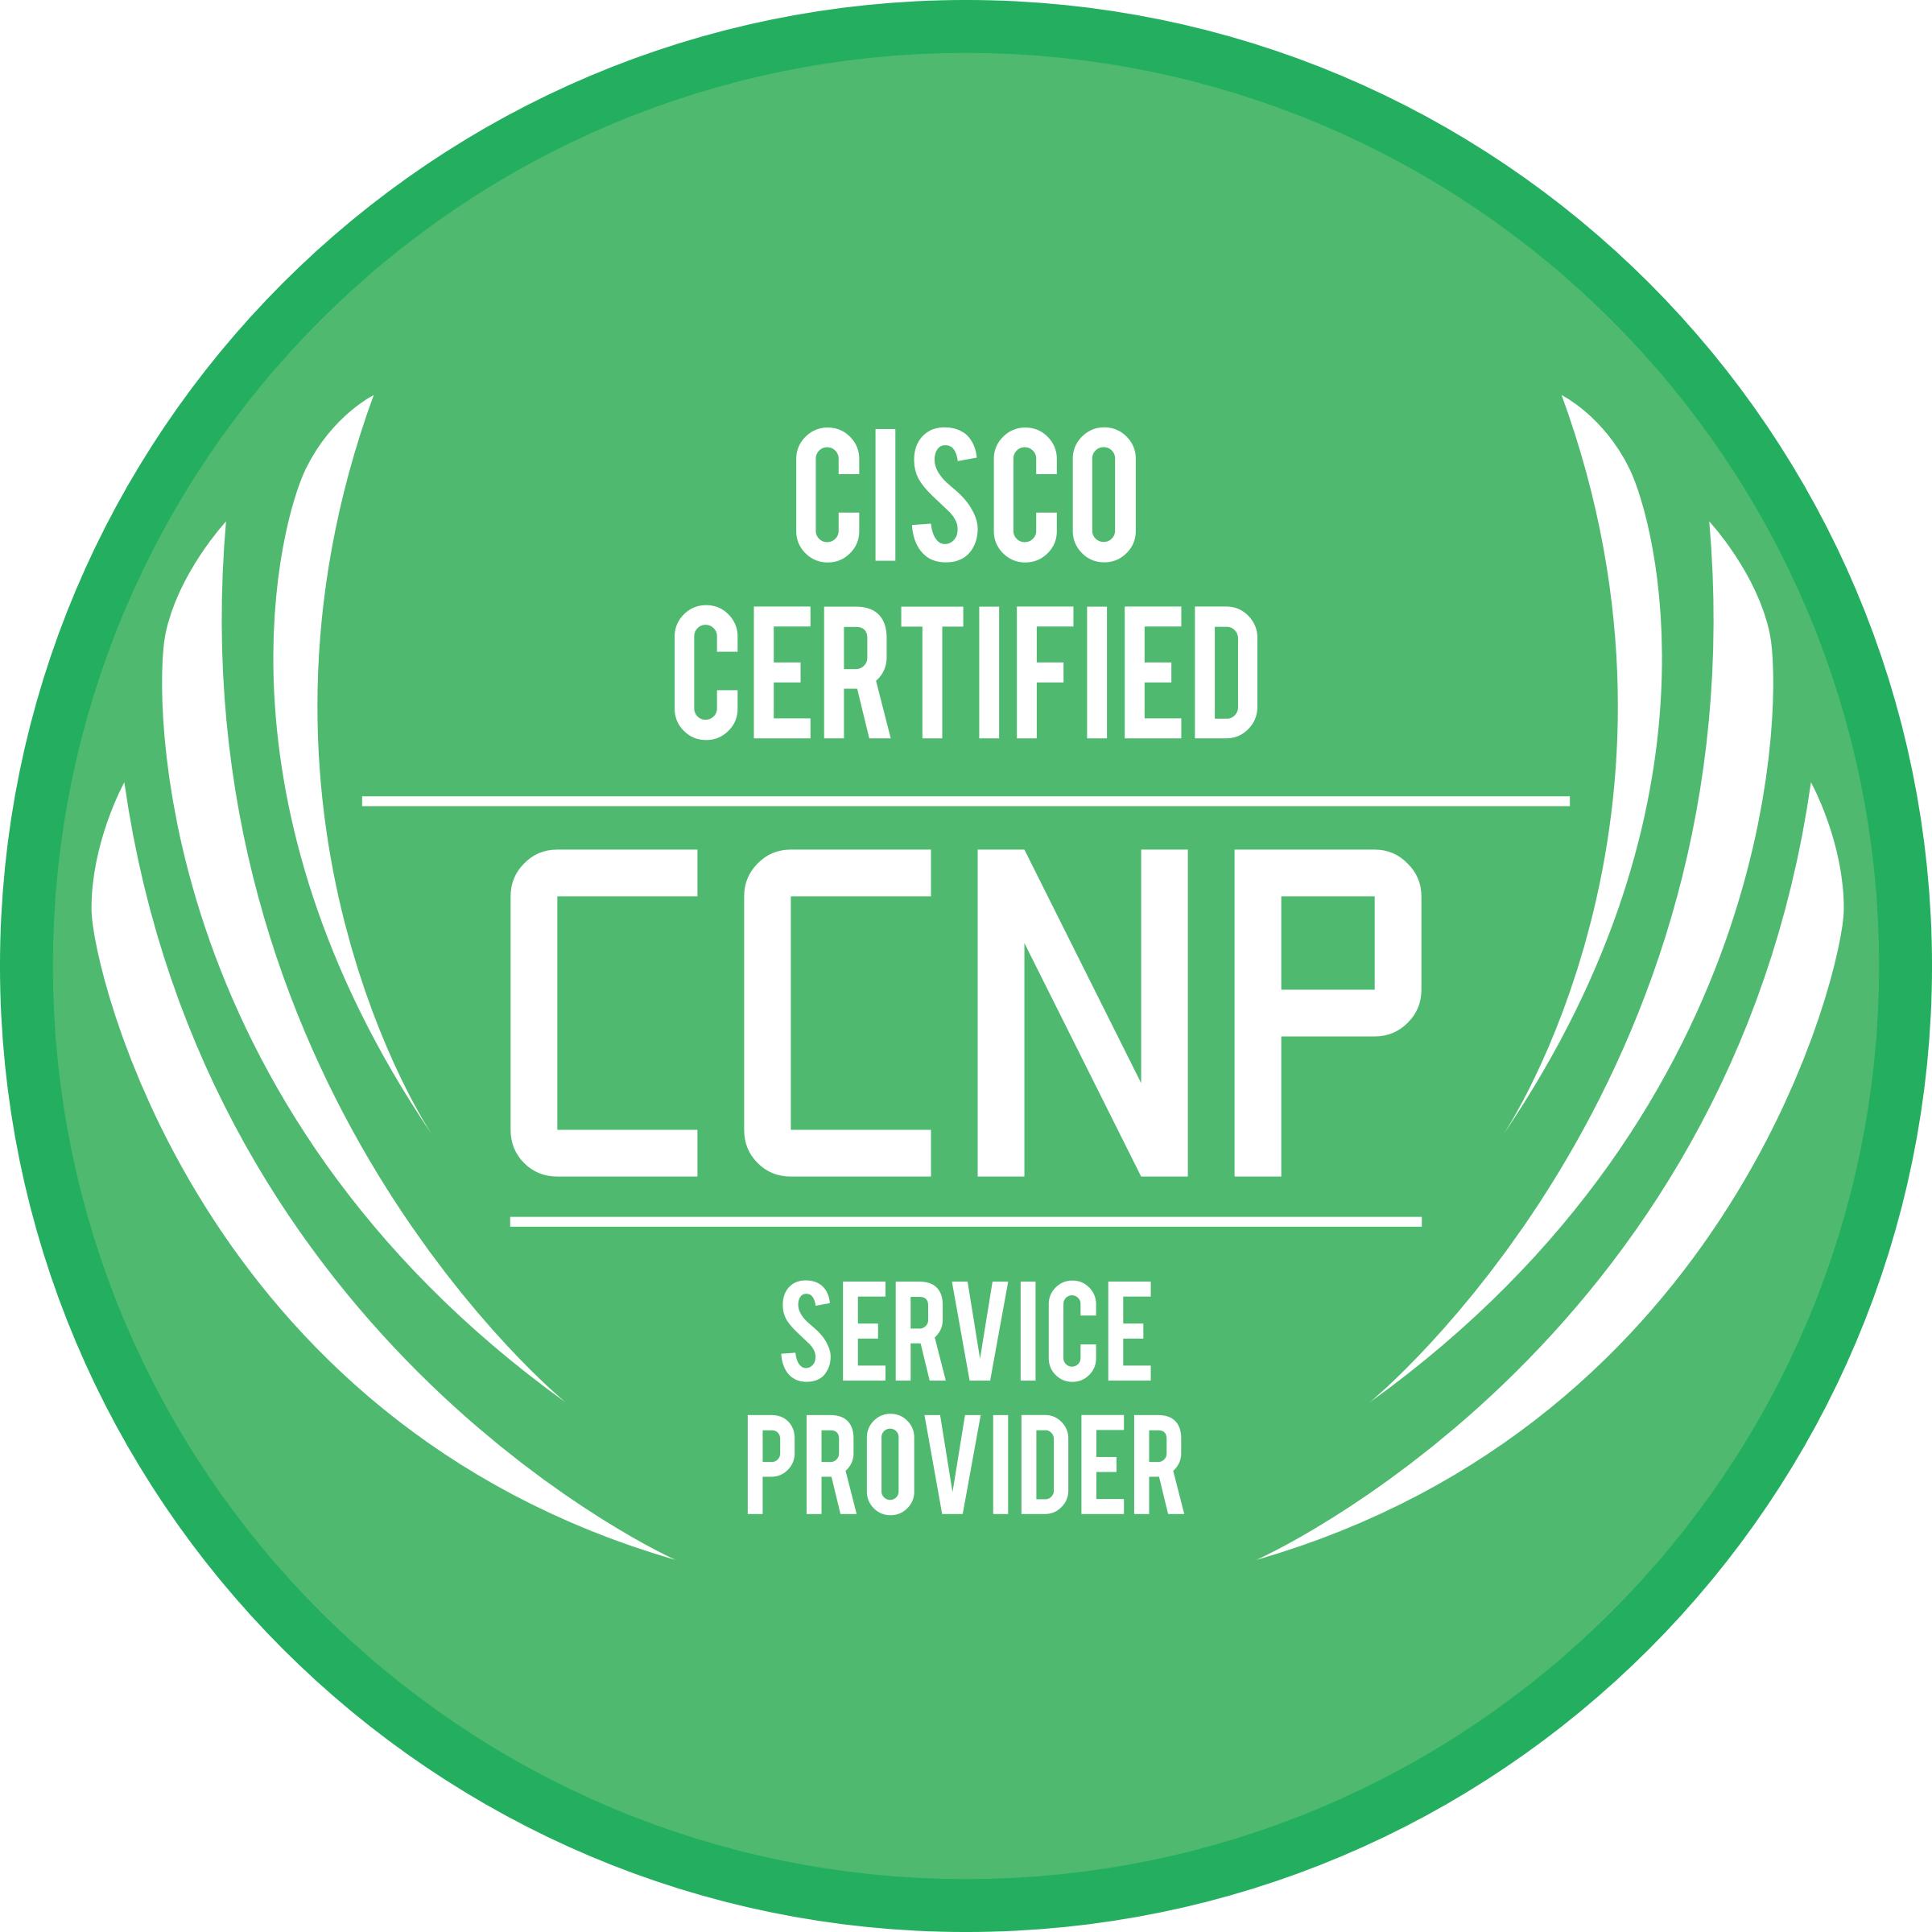 CCNP Service Provider png